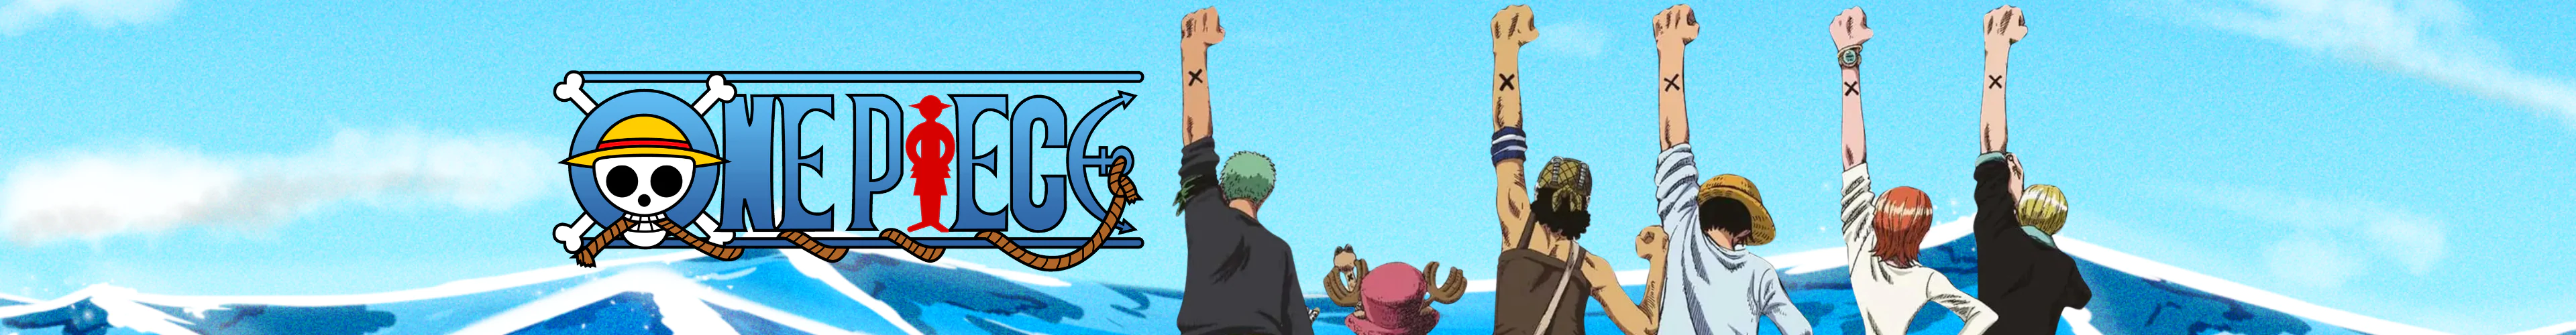 One Piece figuren banner